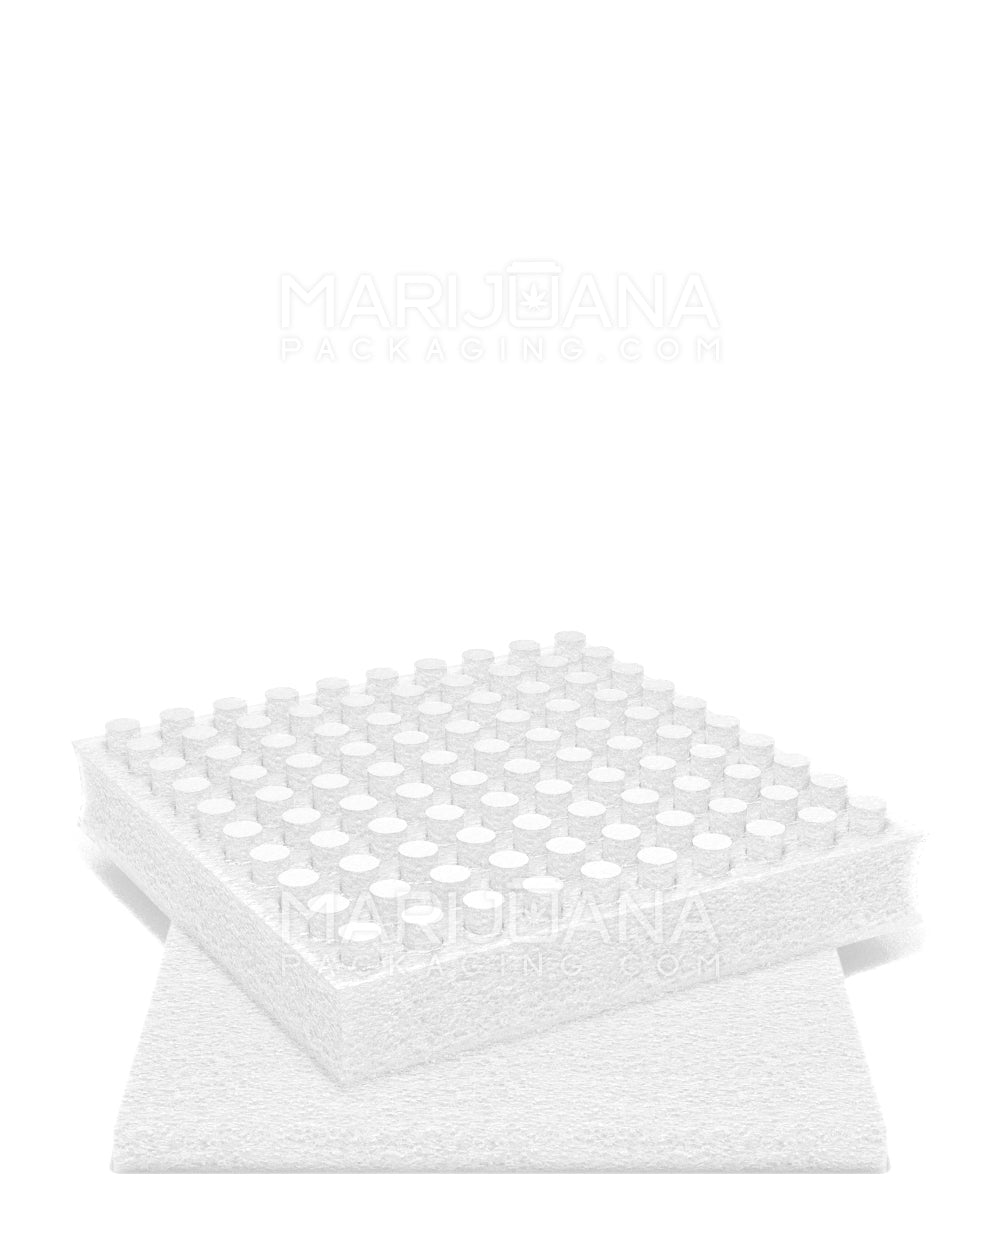 Reusable Foam Vaporizer Cartridge Filling Tray | 7in x 7in - White - 100 Slots - 3